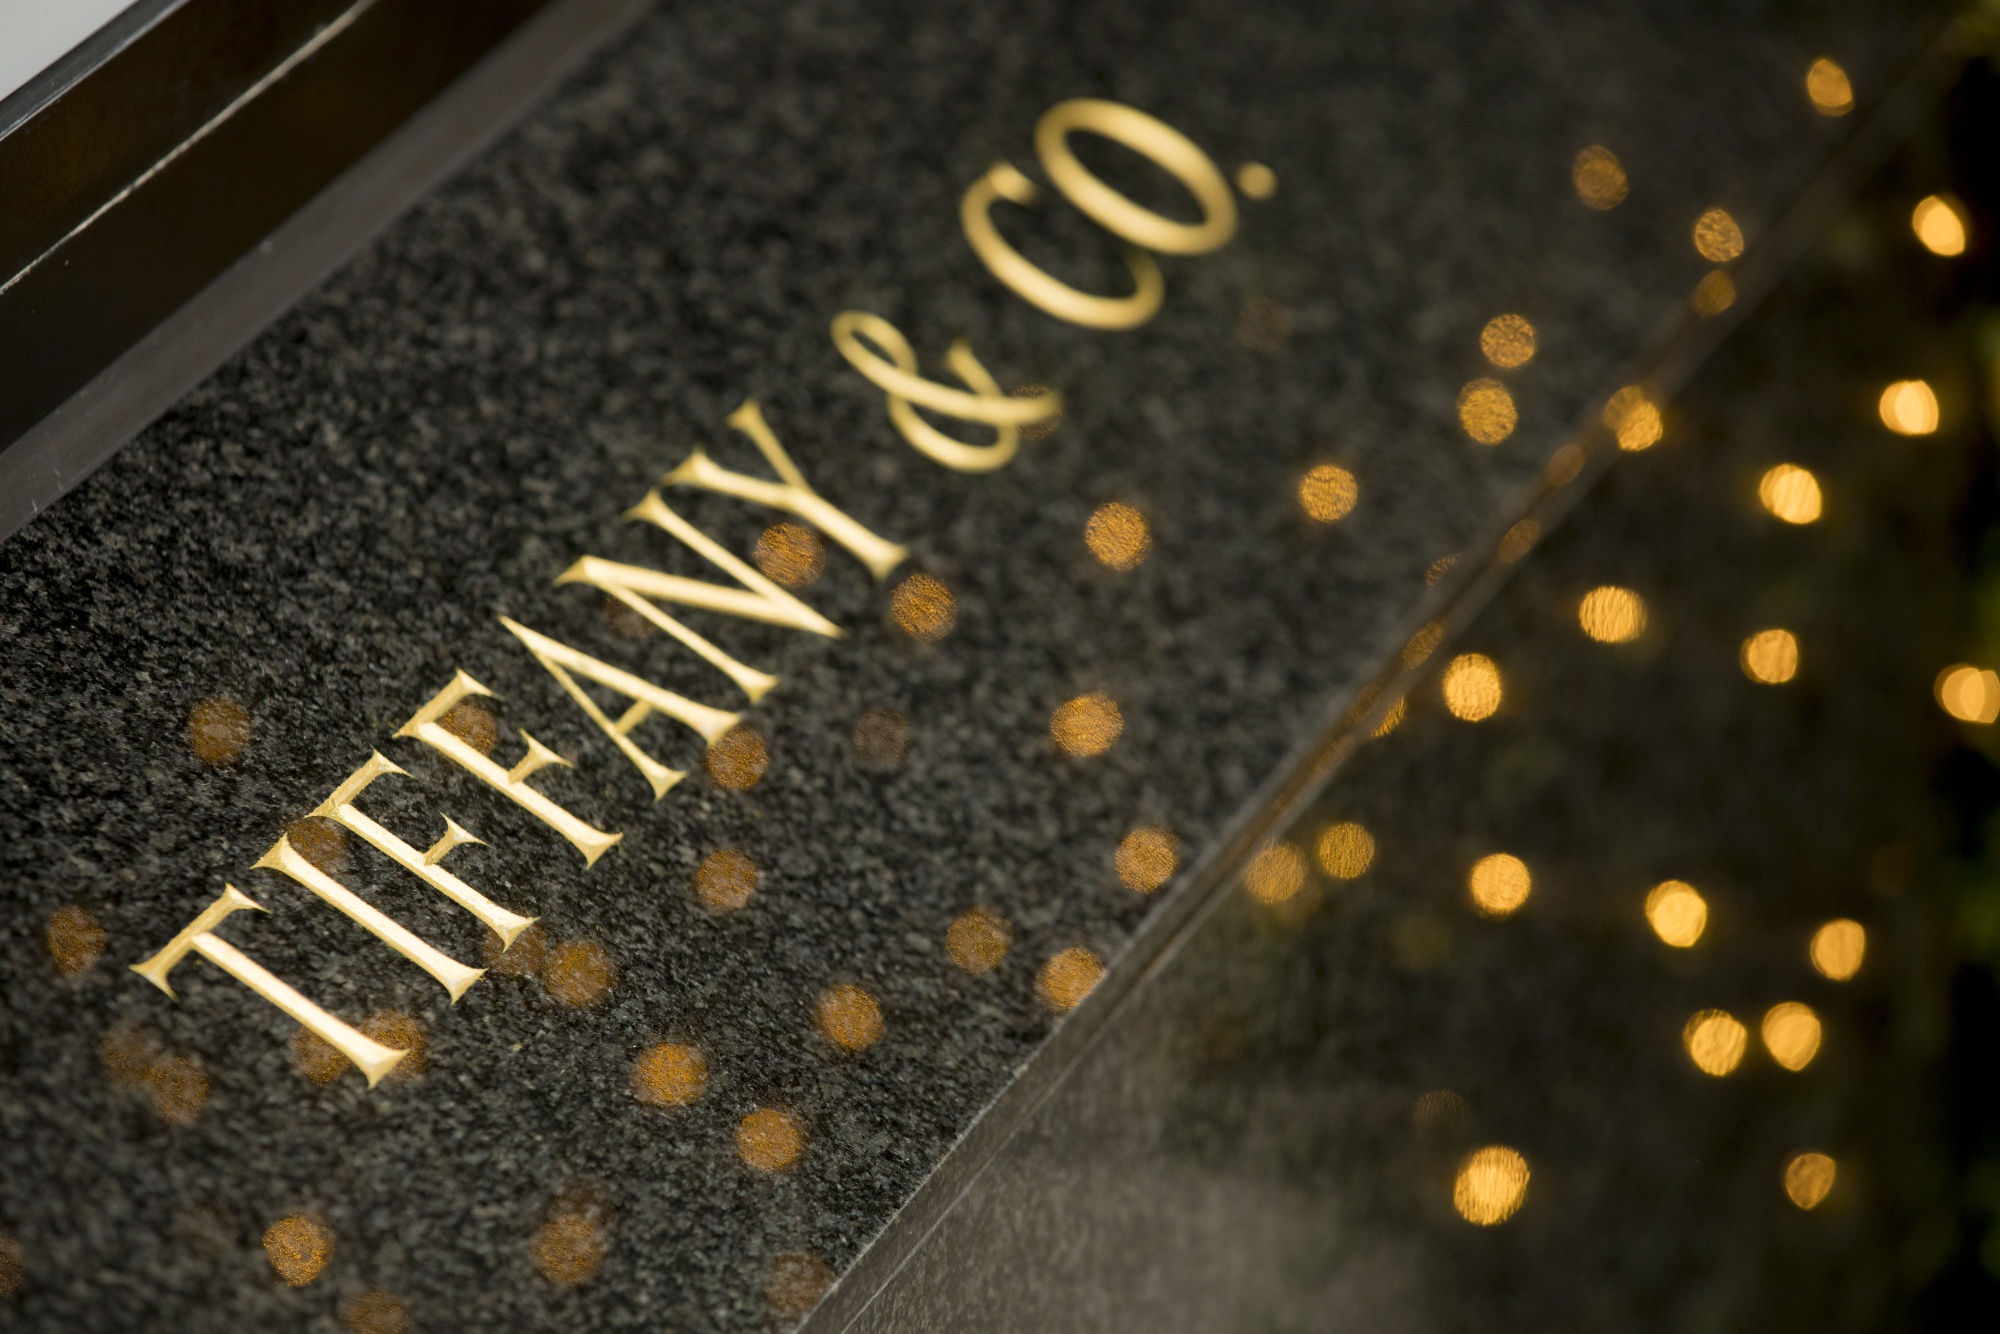 LVMH and Tiffany: Deal Bid Sweetened to $16 Billion - Bloomberg